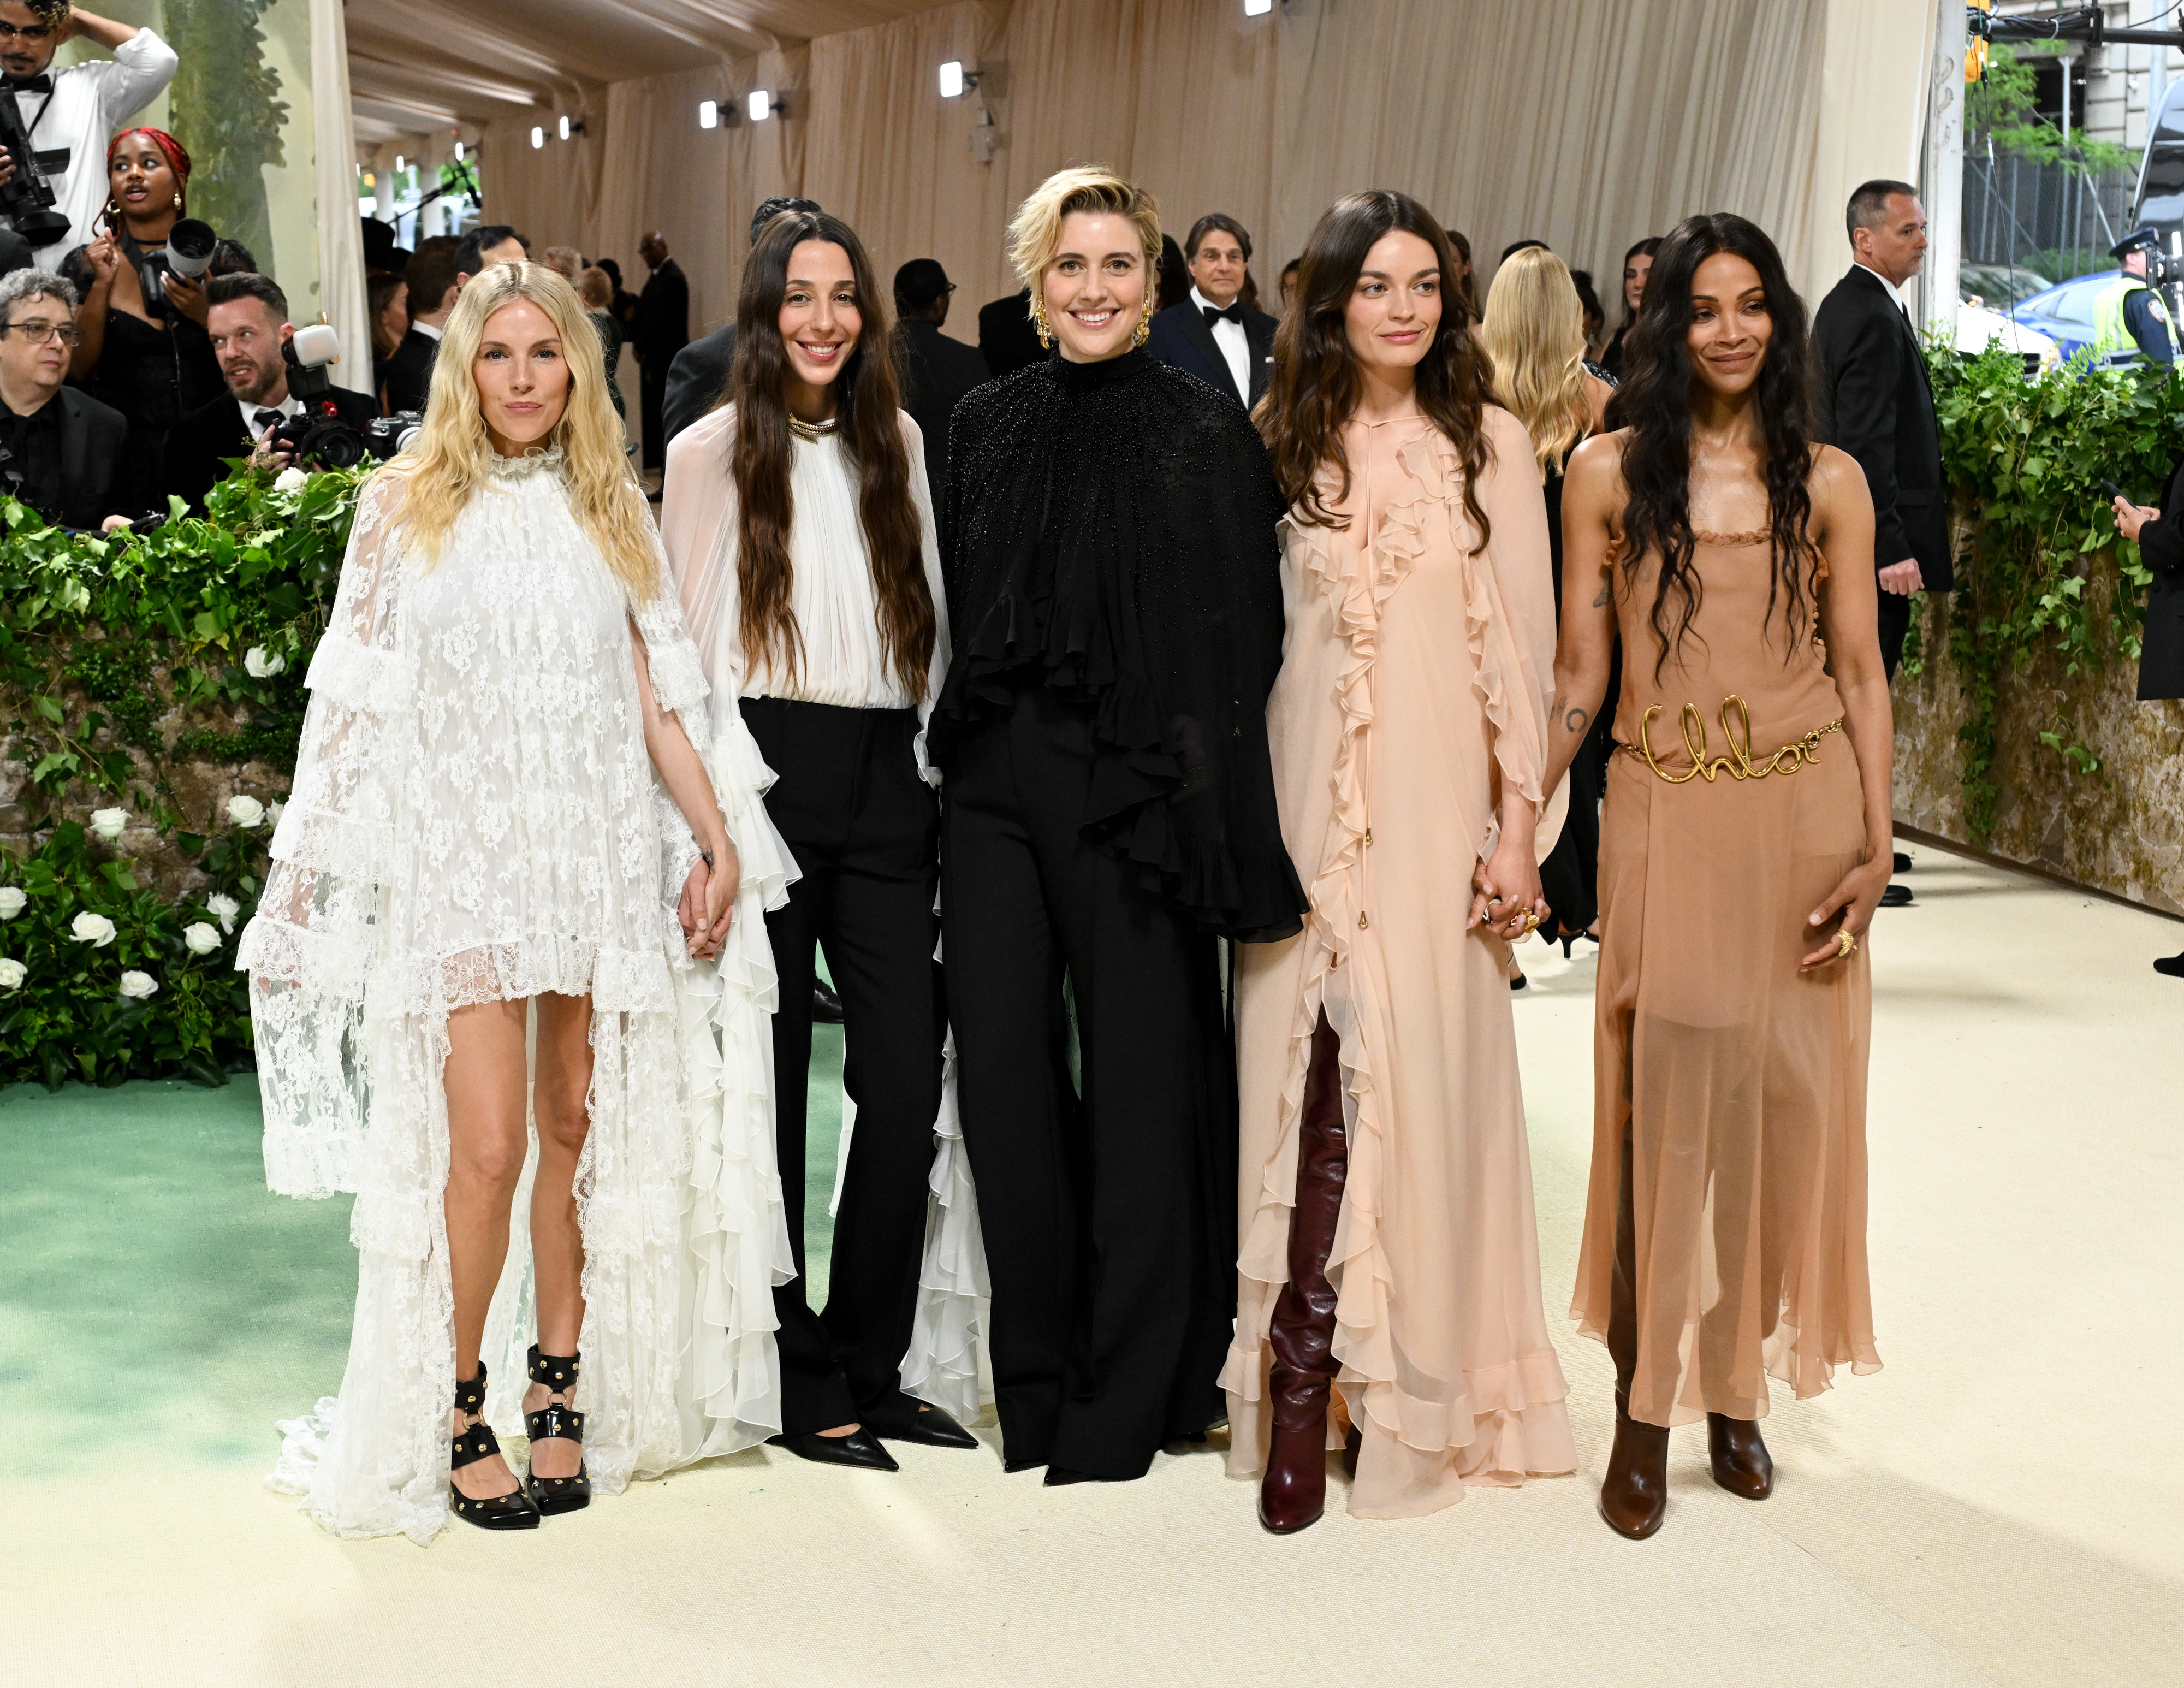 Sienna Miller wears a white lace dress Chloé dress and black studded shoes to the Met Gala 2024, joined by Chemena Kamali, Greta Gerwig, Emma Mackey and Zoe Saldana